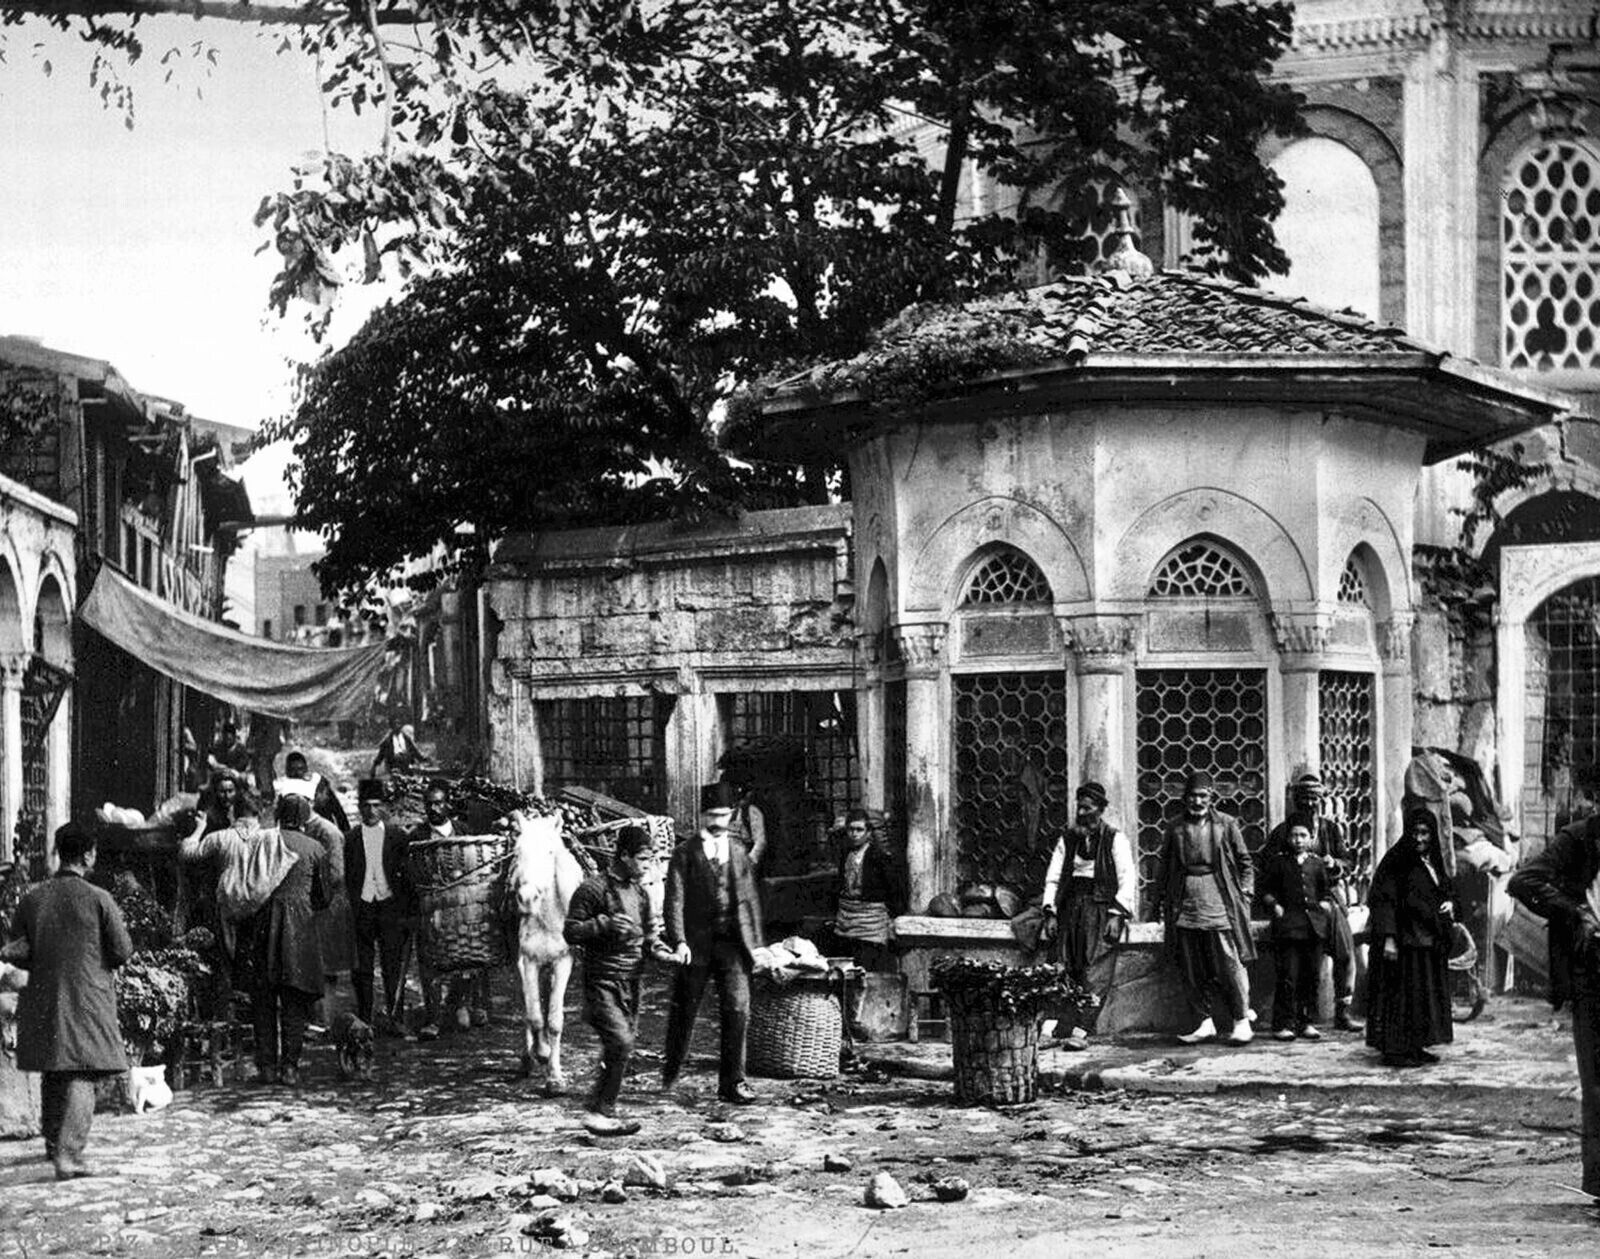 1891 CONSTANTINOPLE TURKEY Cityscape Classic Picture Photo Art Print 5x7